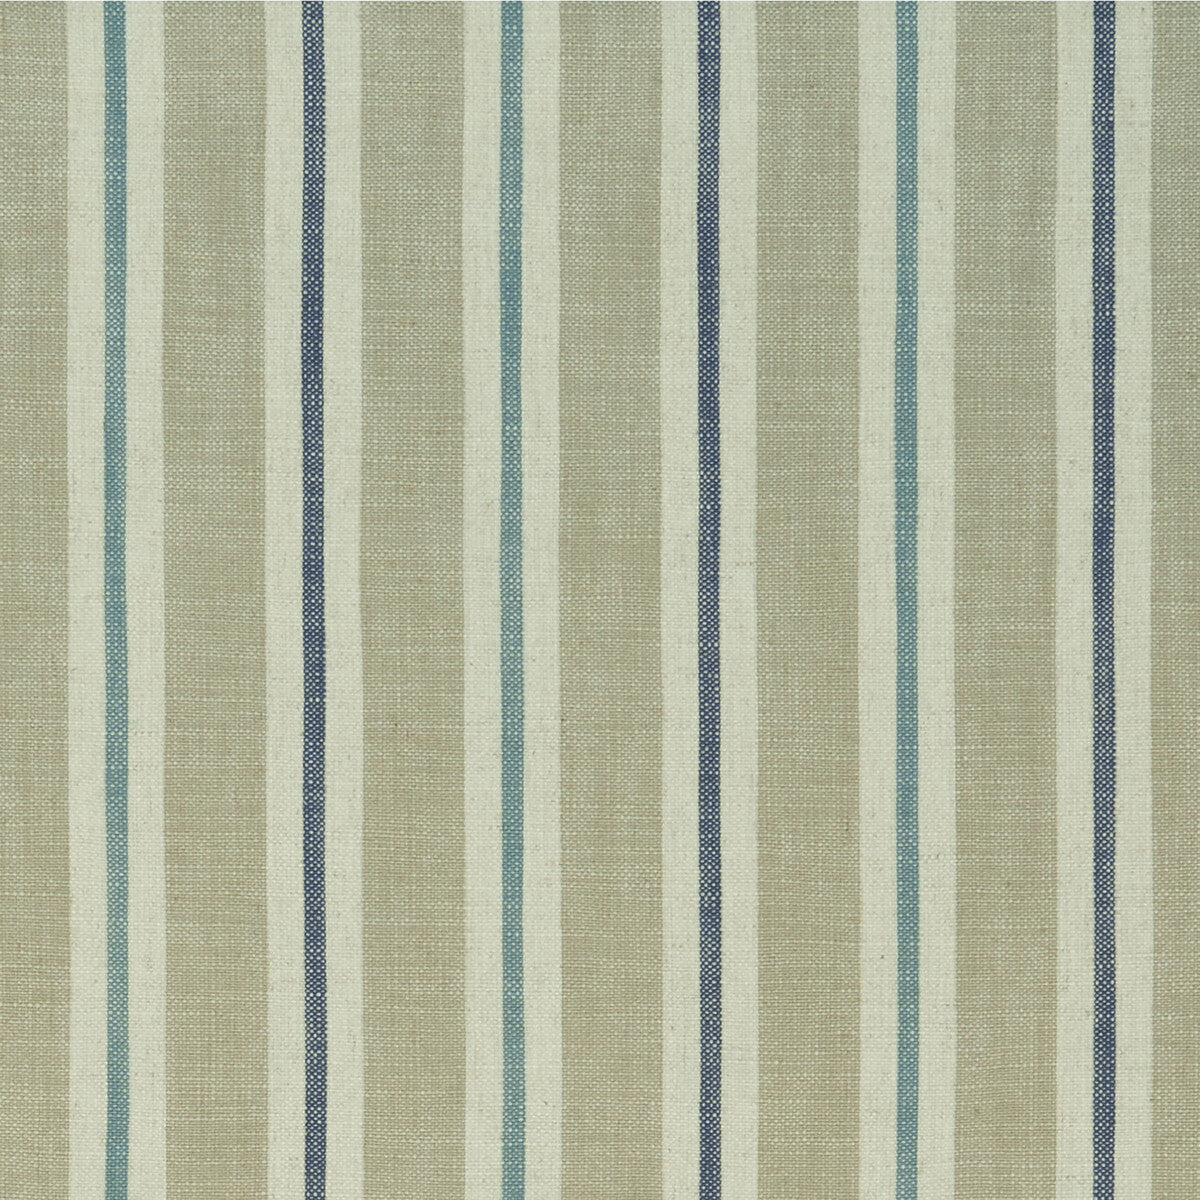 Sackville Stripe fabric in eau de nil/linen color - pattern F1046/02.CAC.0 - by Clarke And Clarke in the Clarke &amp; Clarke Castle Garden collection